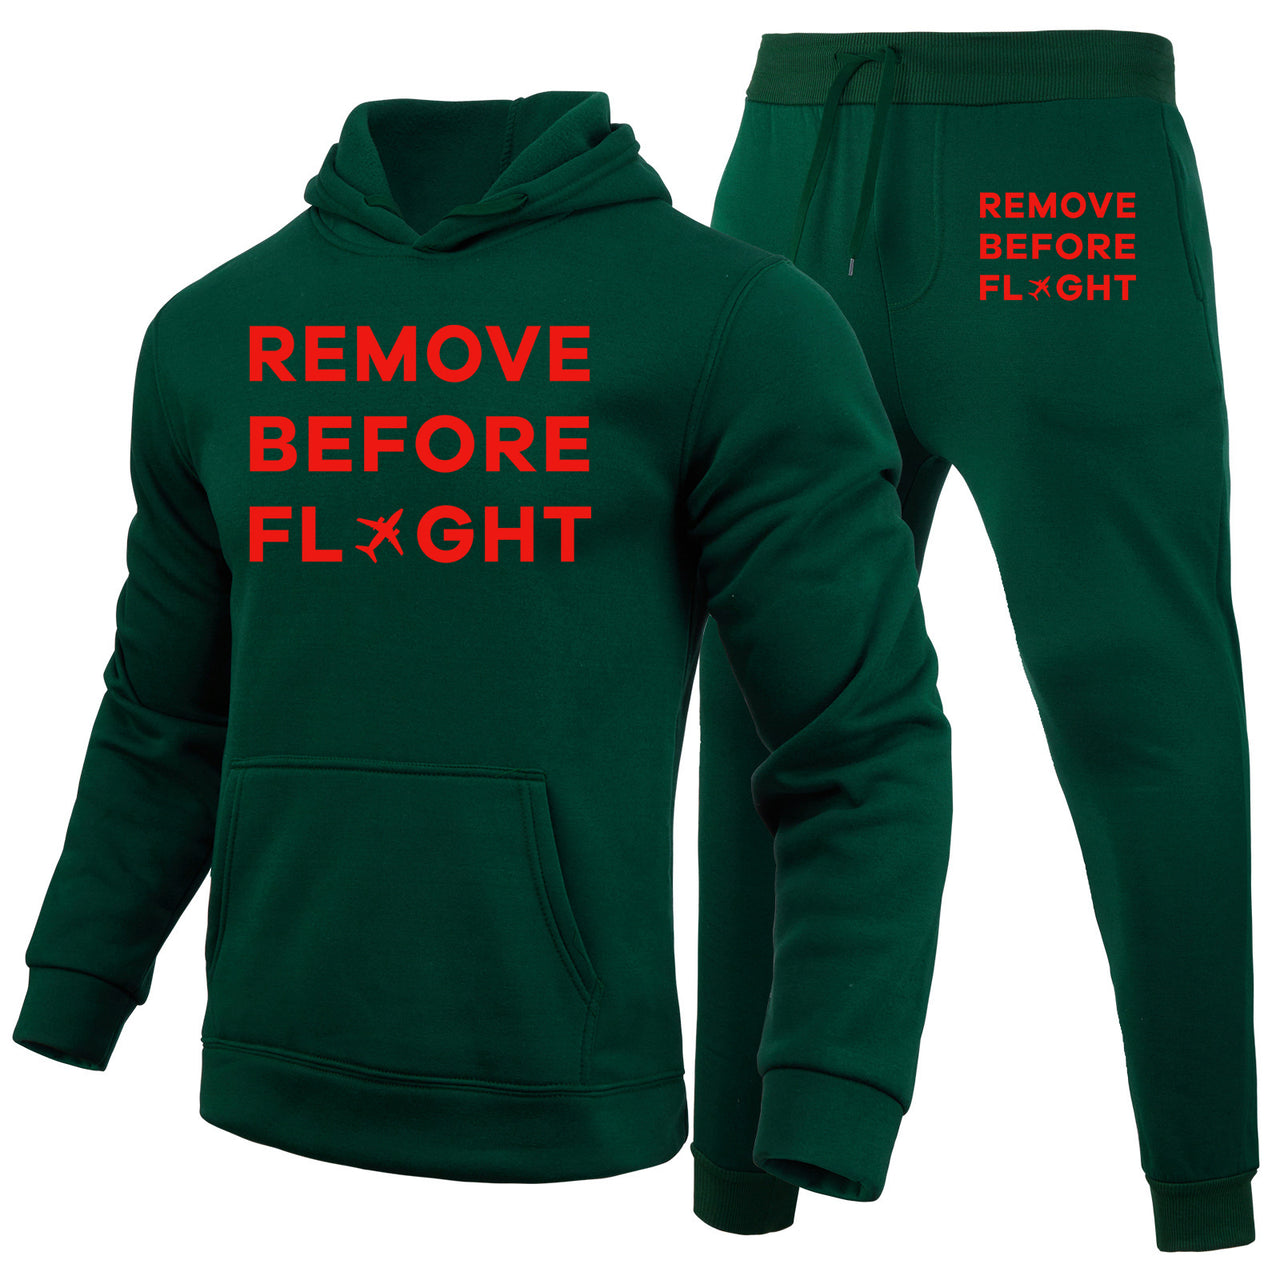 Remove Before Flight Designed Hoodies & Sweatpants Set